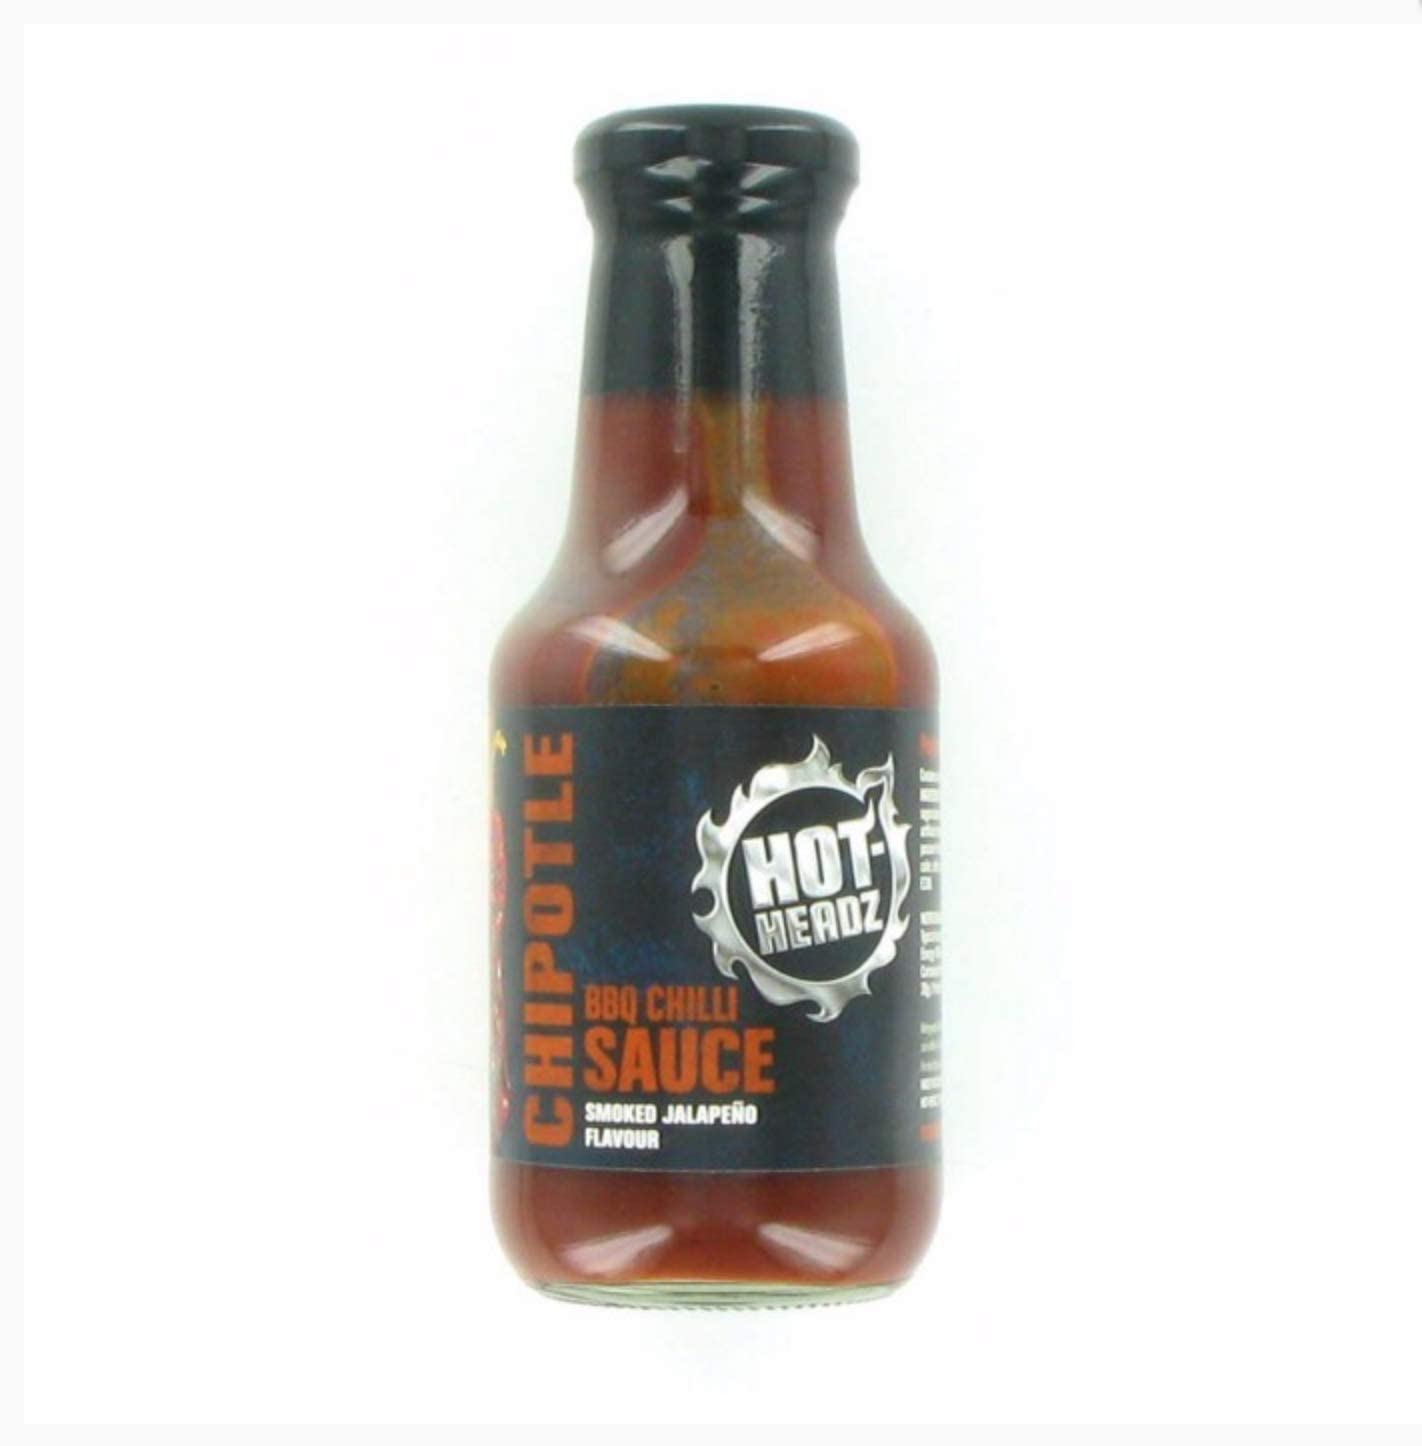 Hot-Headz! Smoky Chipotle BBQ Sauce